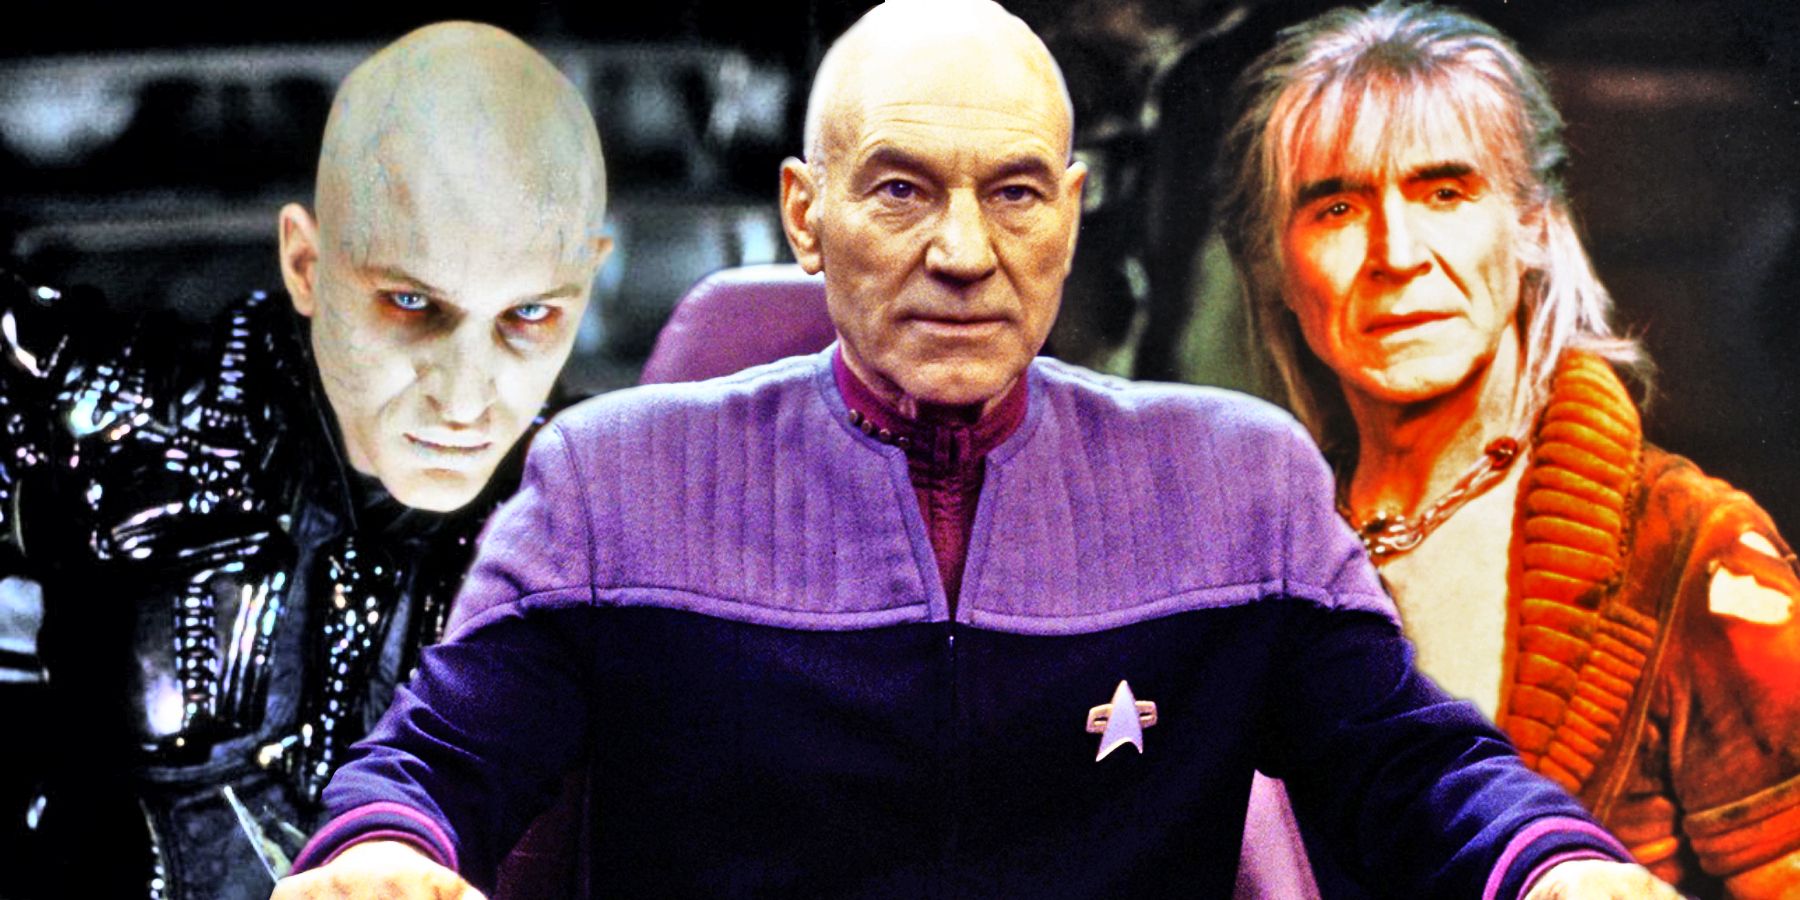 Shinzon, Picard and Khan from Star Trek